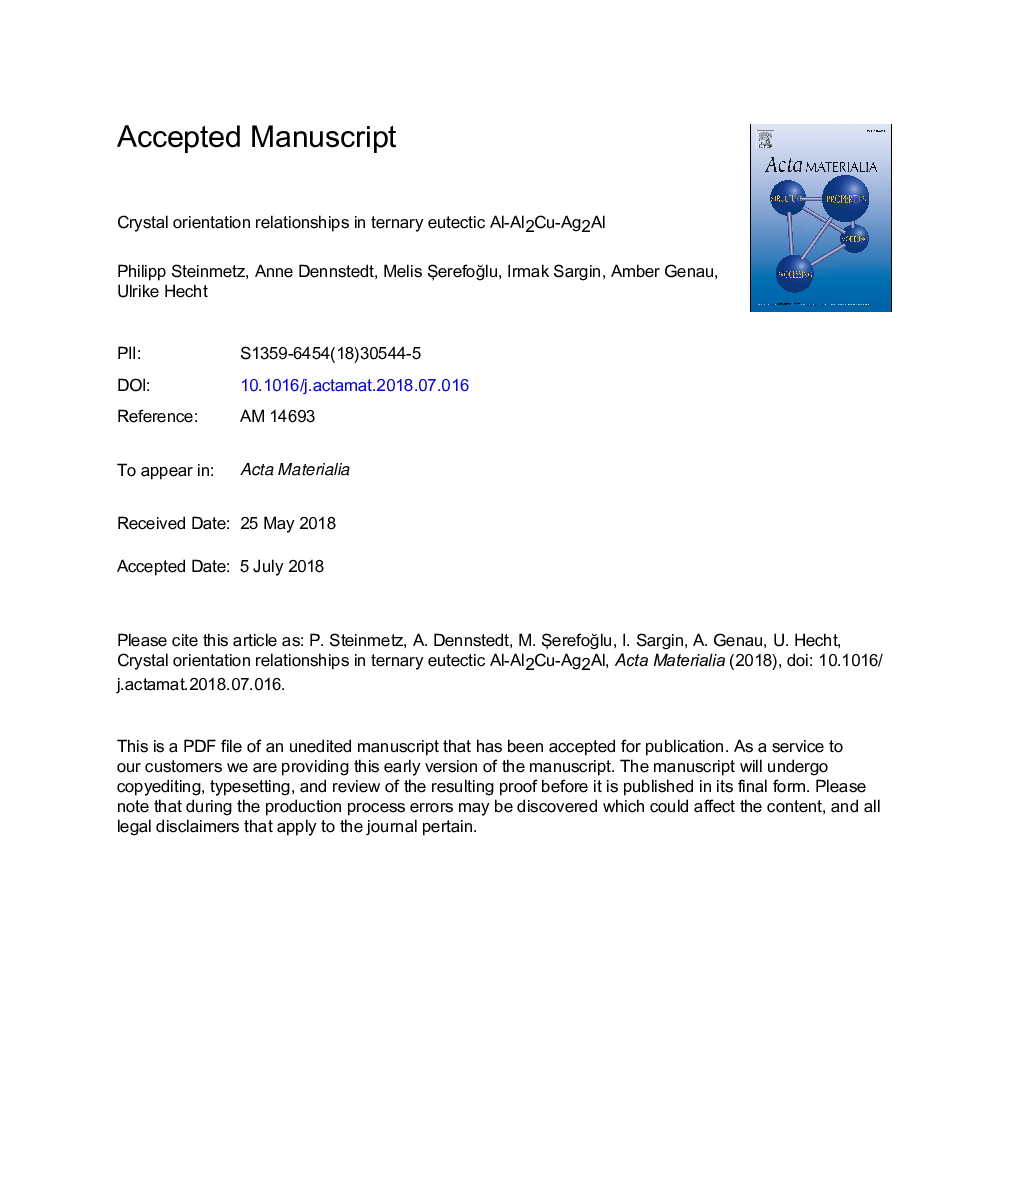 Crystal orientation relationships in ternary eutectic Al-Al2Cu-Ag2Al